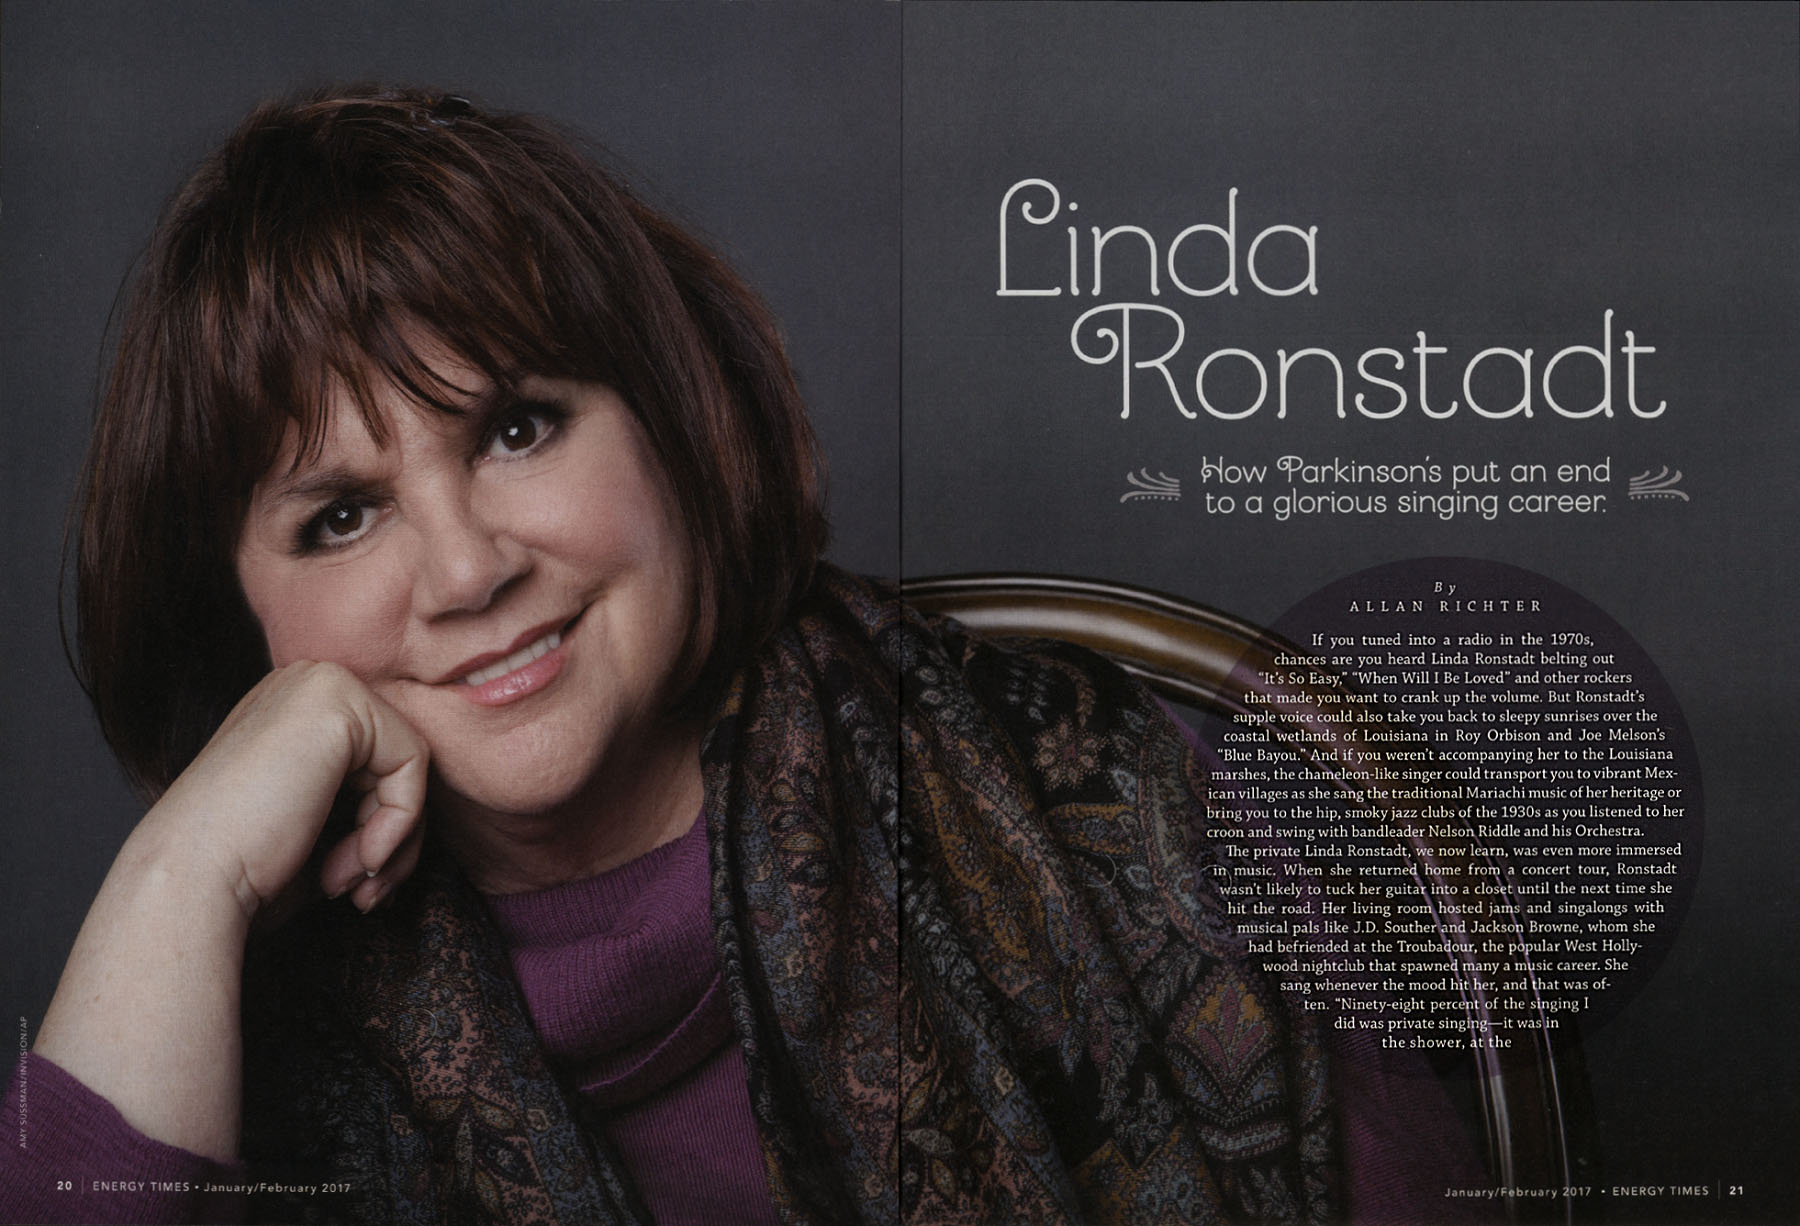 Linda Ronstadt Energy Times